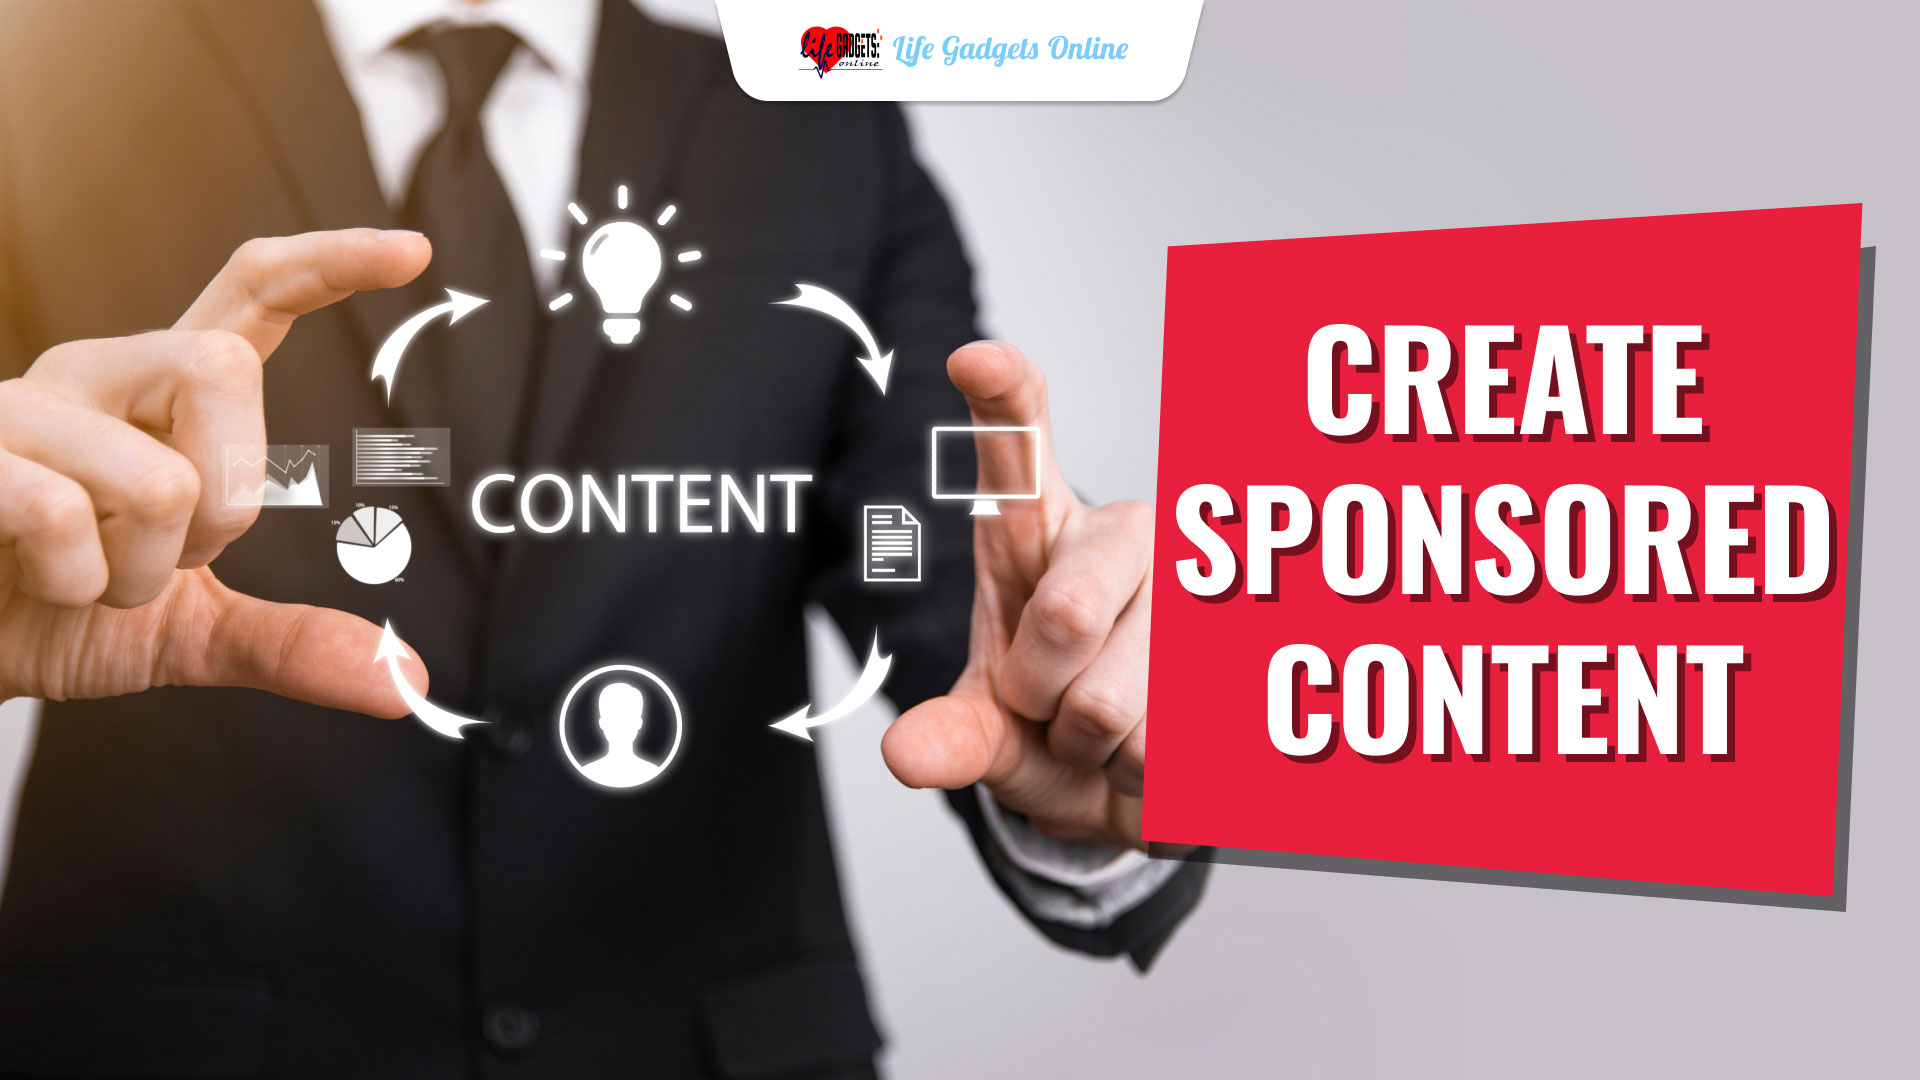 Create sponsored content